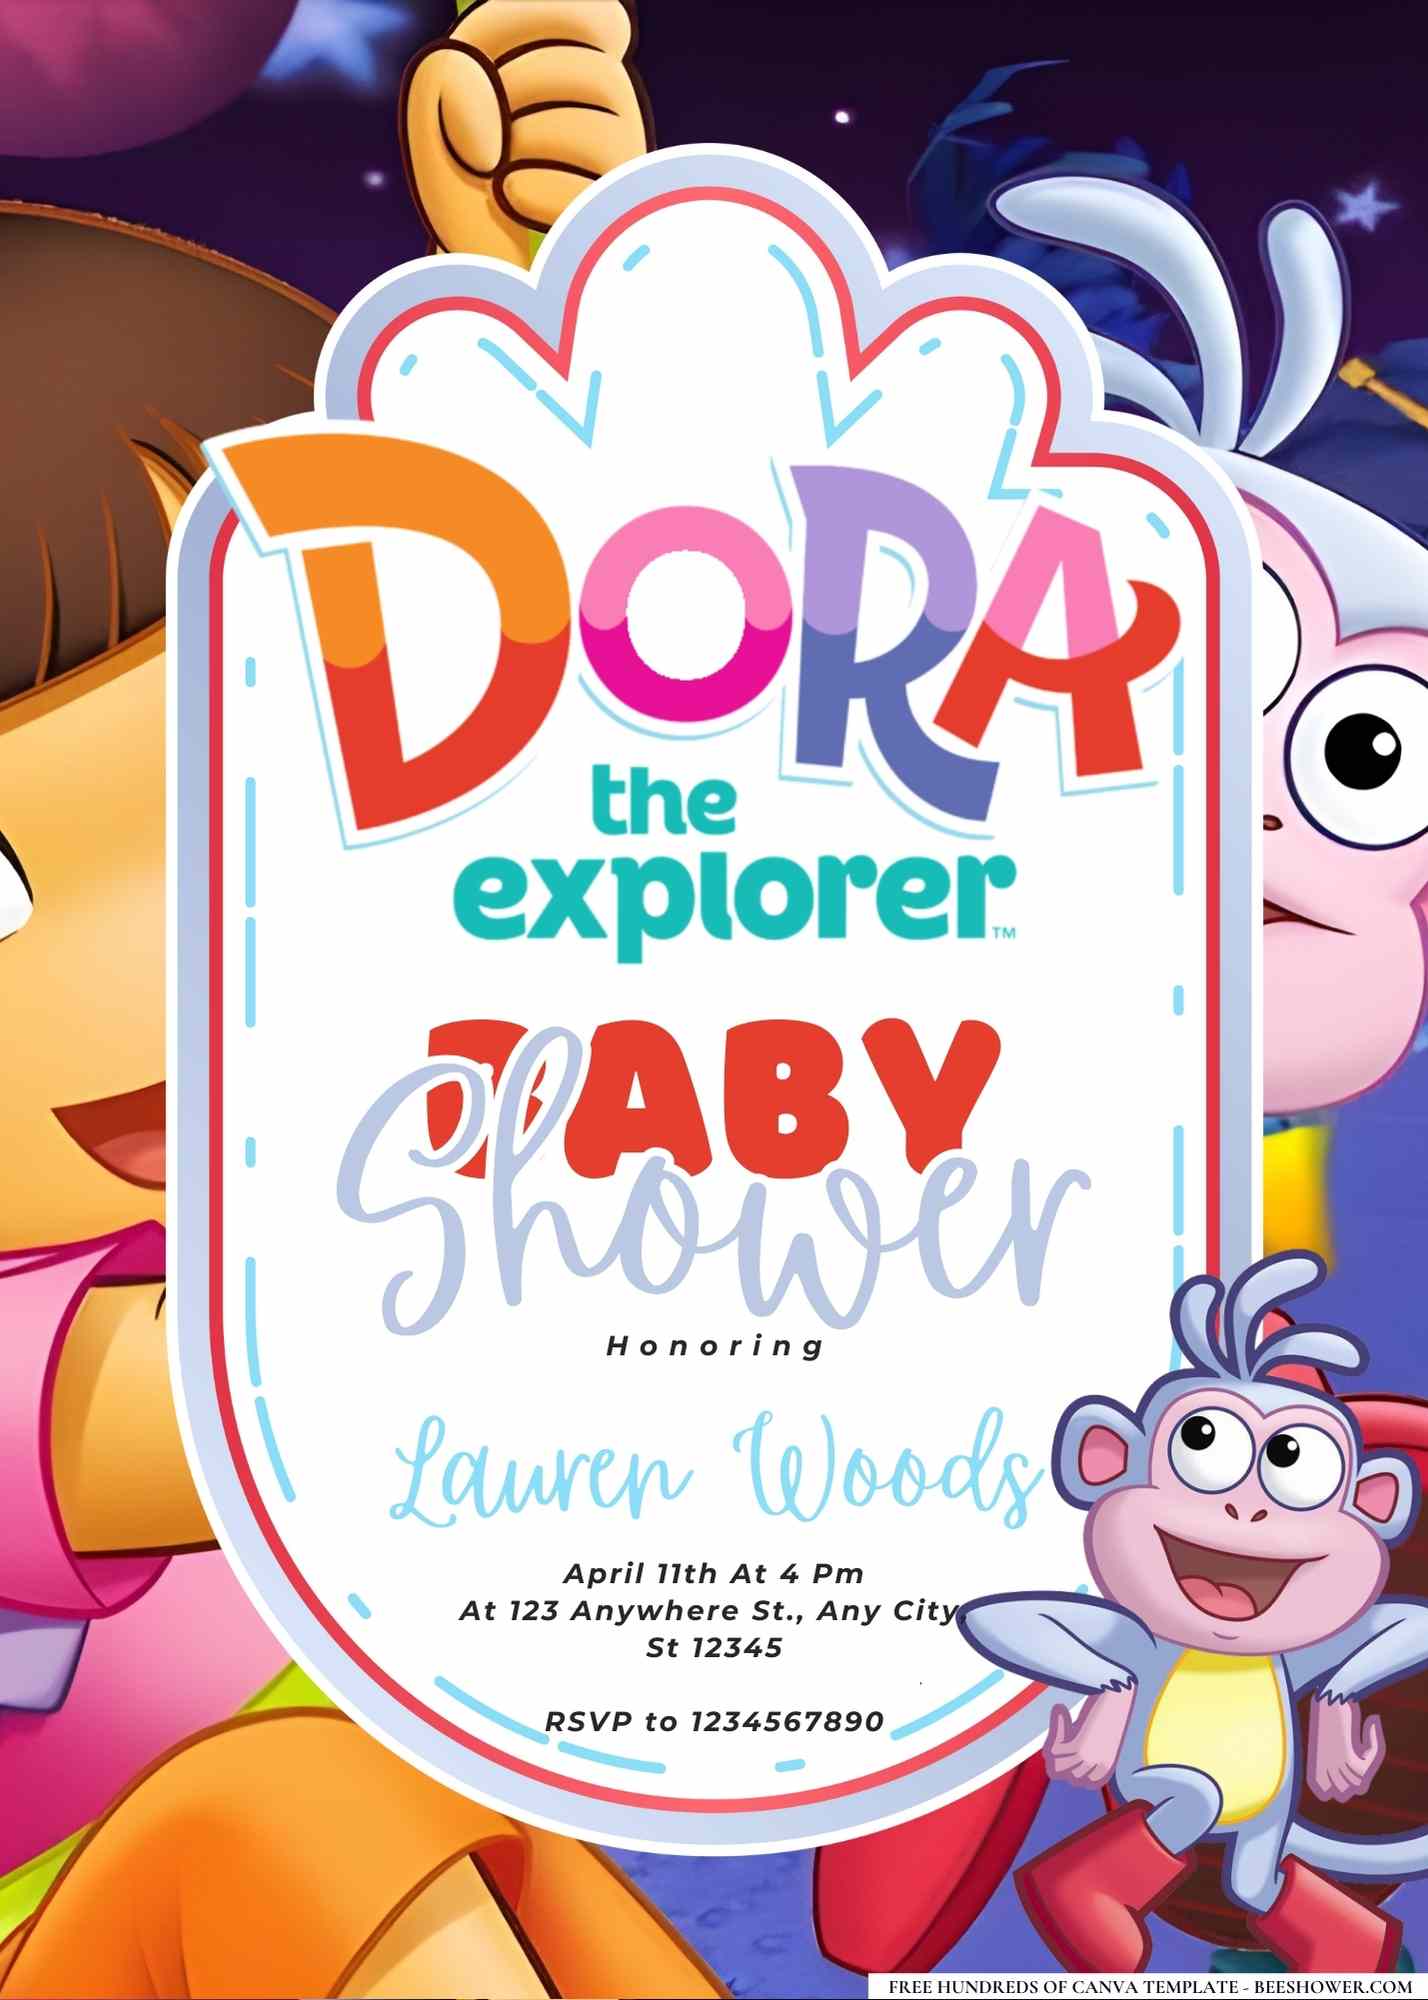 Boots (Dora the Explorer) Baby Shower Invitation